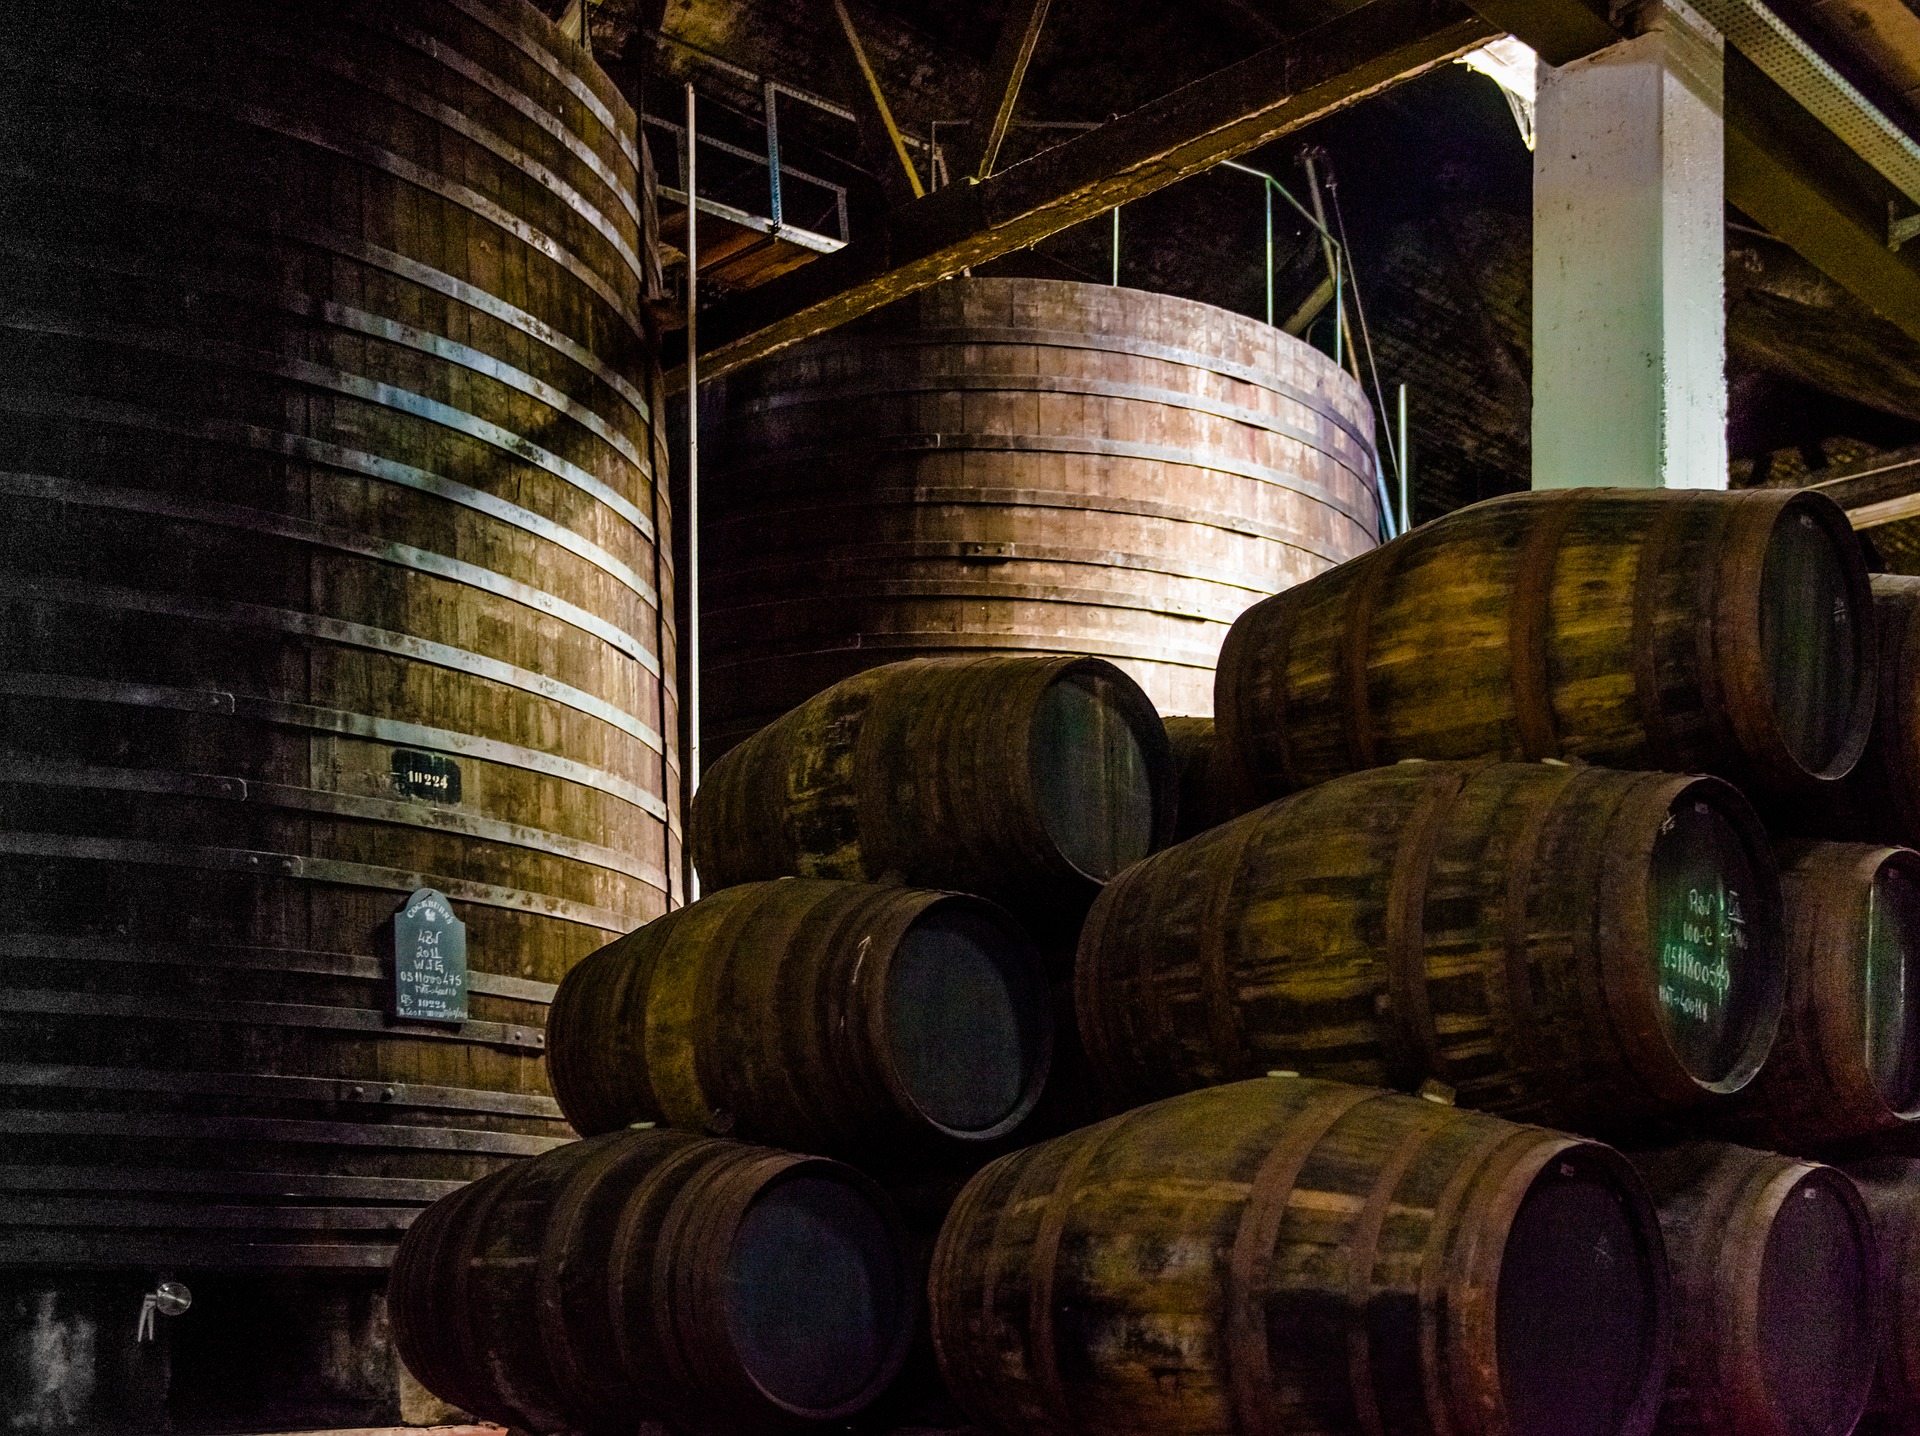 Barrels of St Anne's Wine